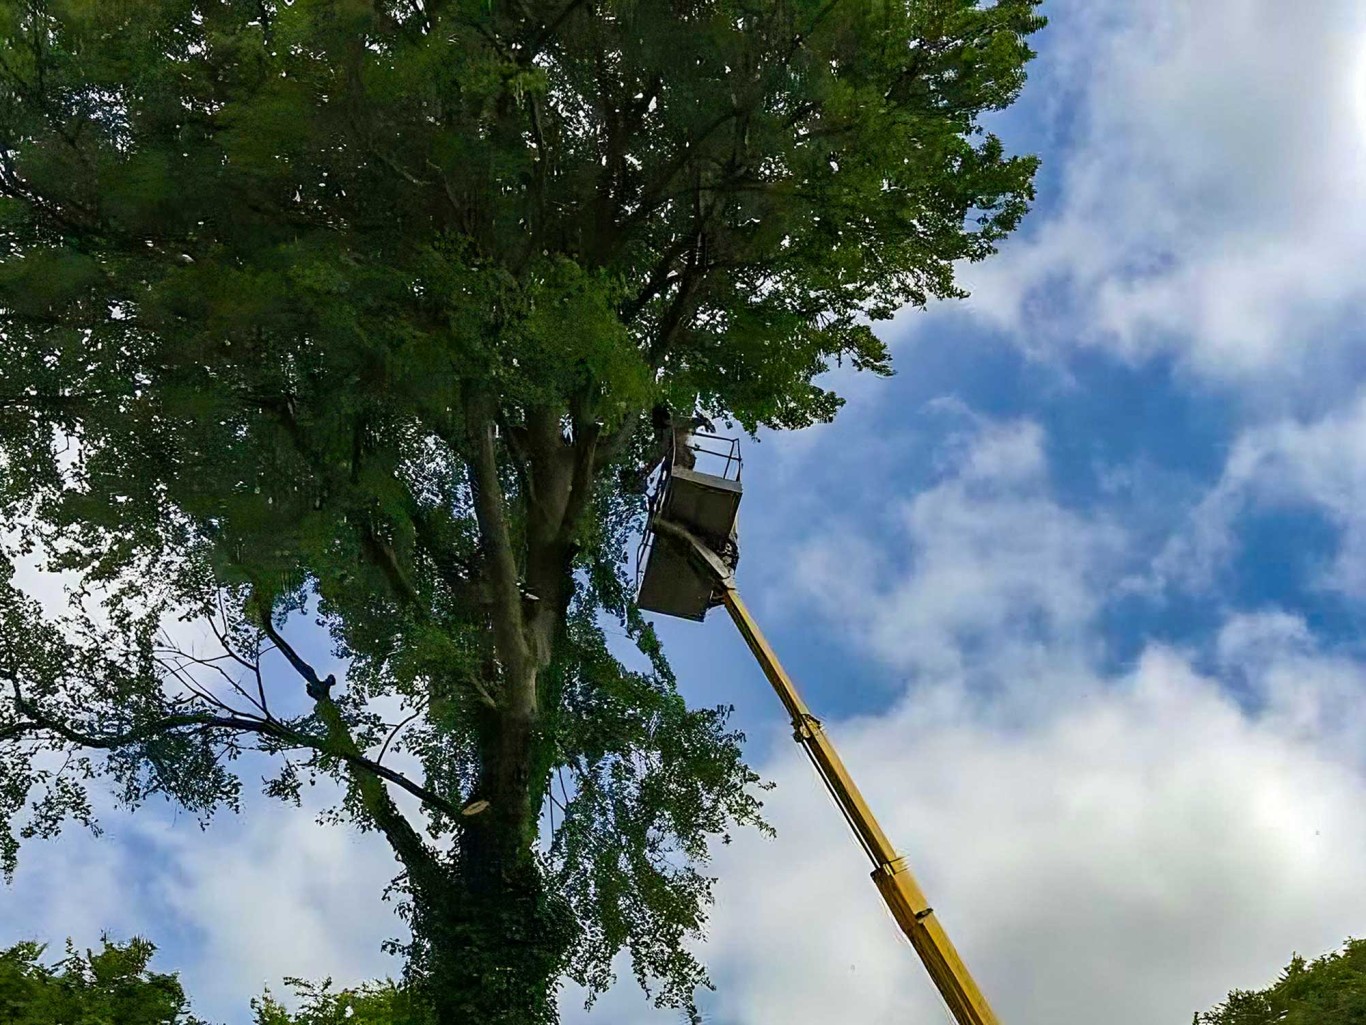 Tree surgeon on platform up high in tree reducing crown.